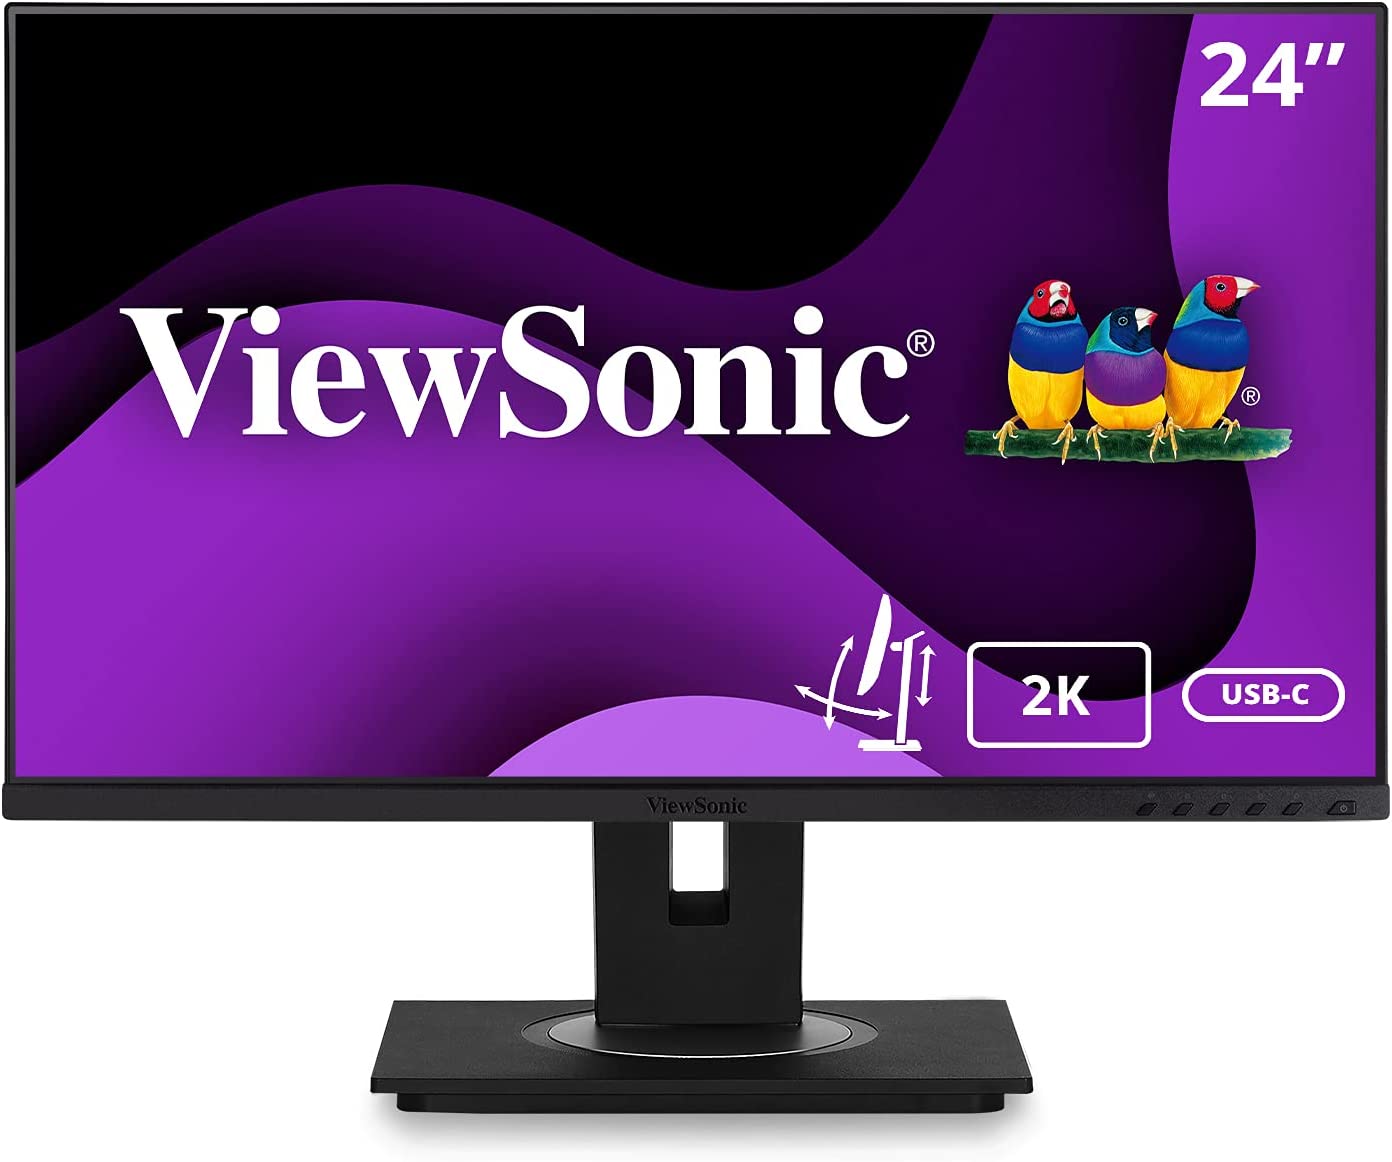 ViewSonic 24-inch